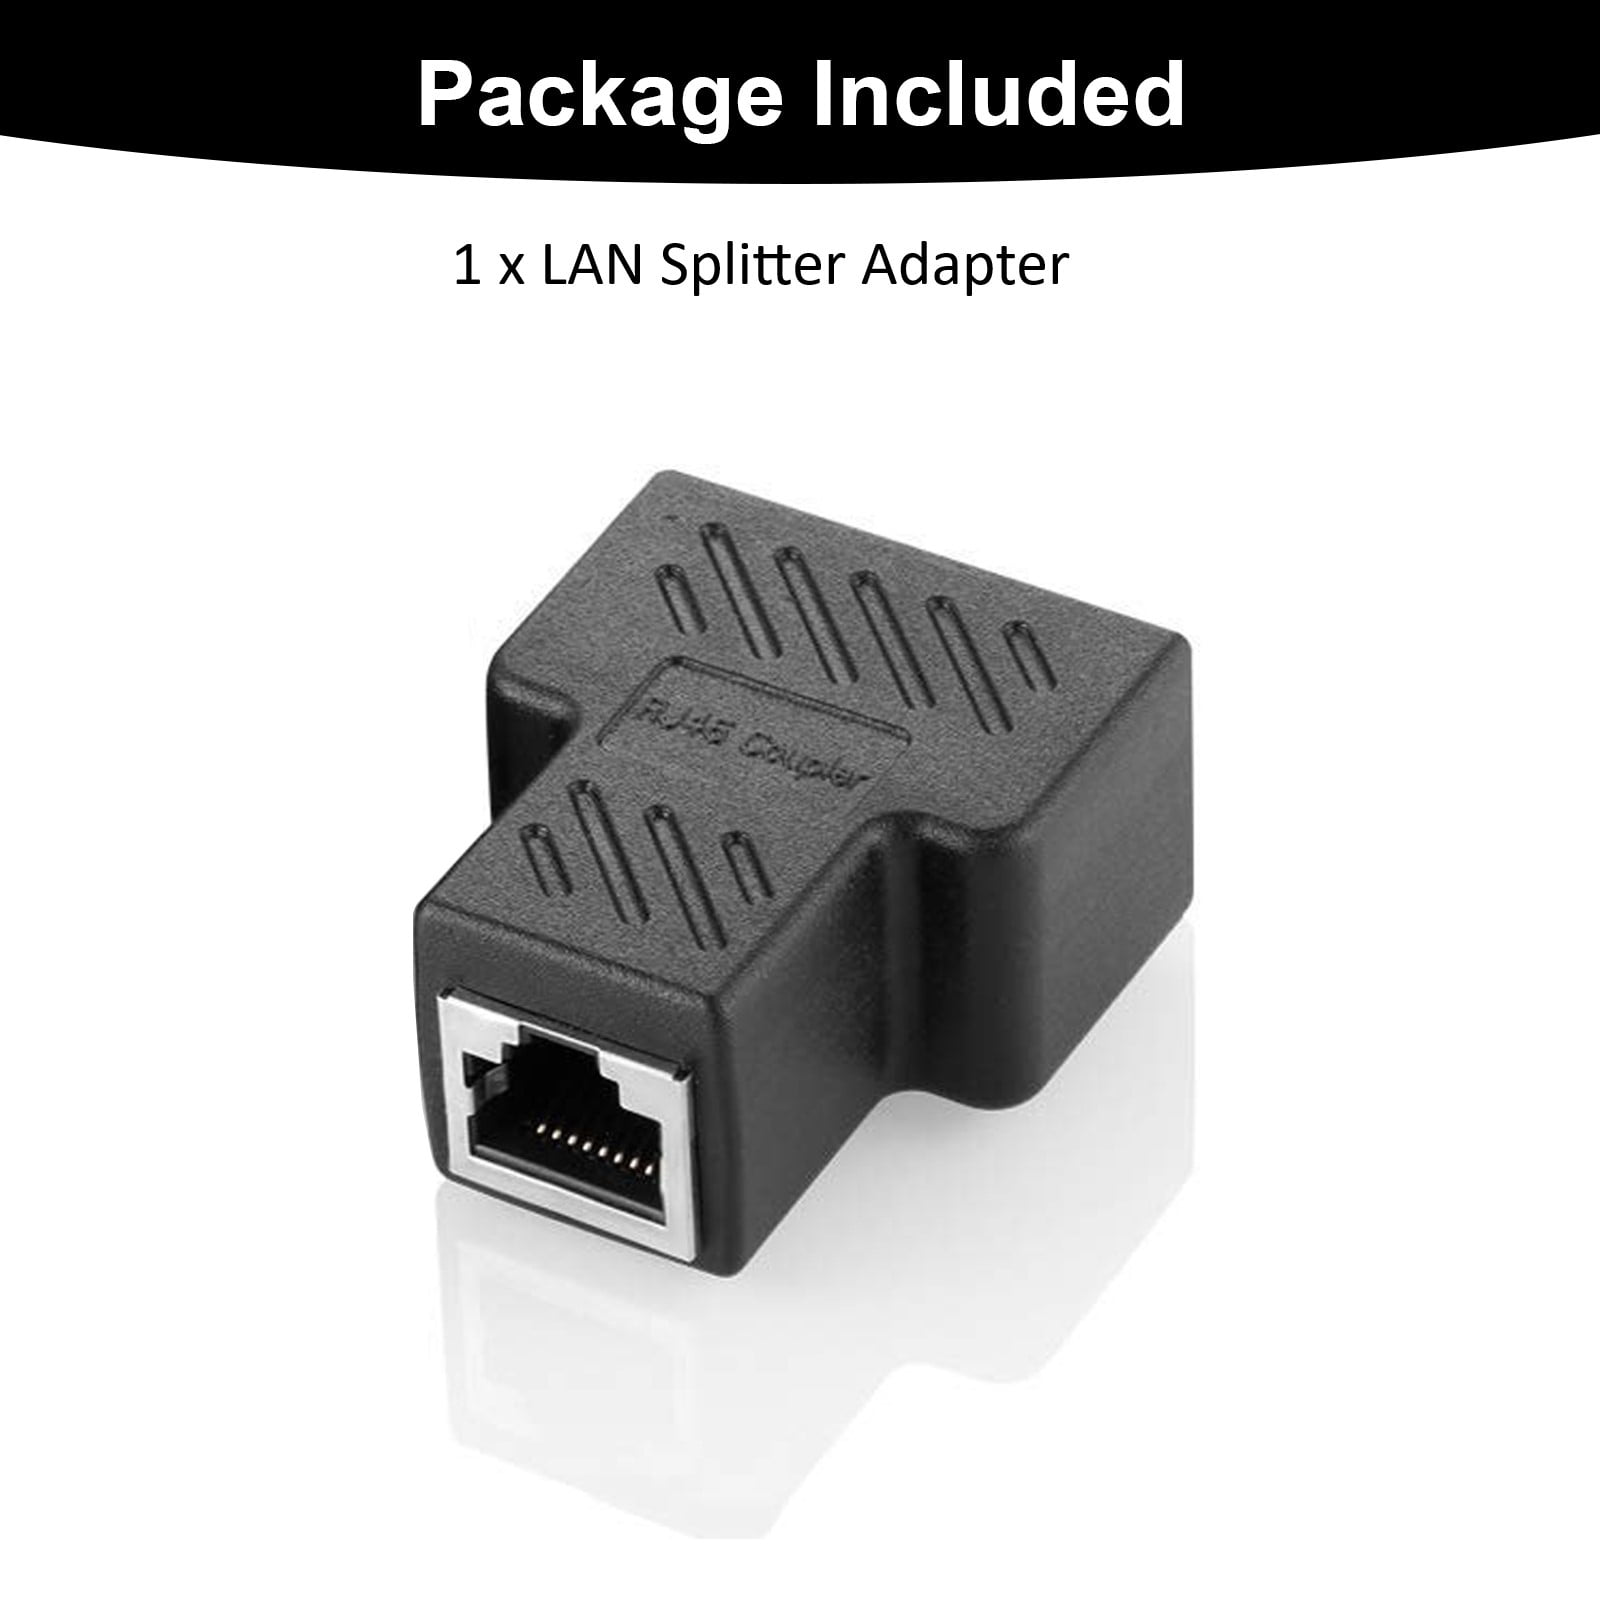 Cheap RJ45 Ethernet Splitter Cable Rj45 1 Male To 2 Female Port